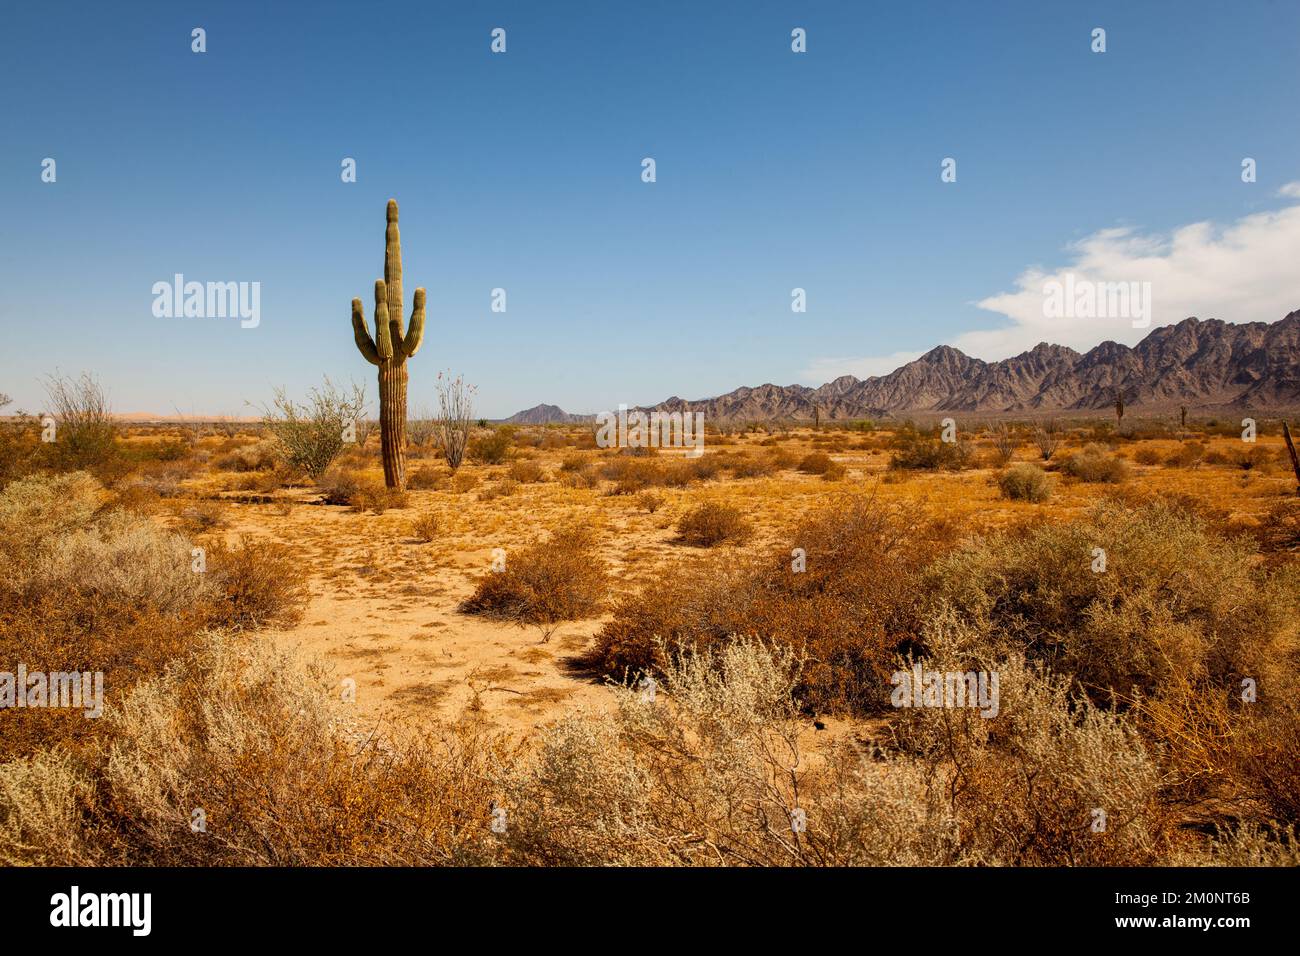 Giant cactus in Sonora desert Stock Photo